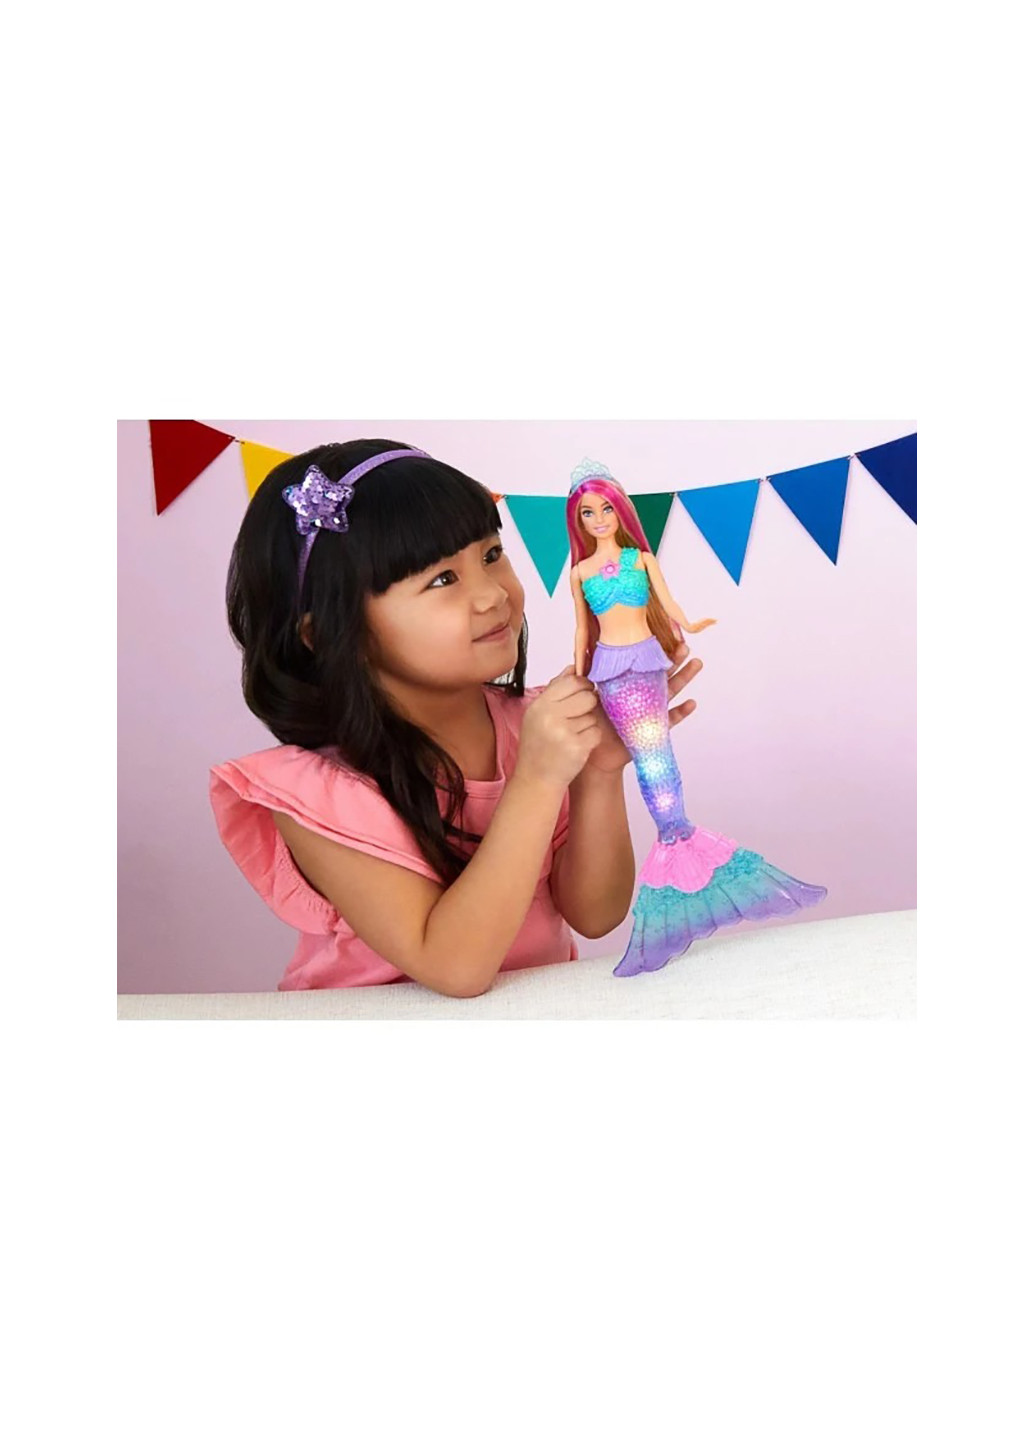 Кукла-русалка "Светящийся хвостик" серии Дримтопия HDJ36 Barbie (259109296)